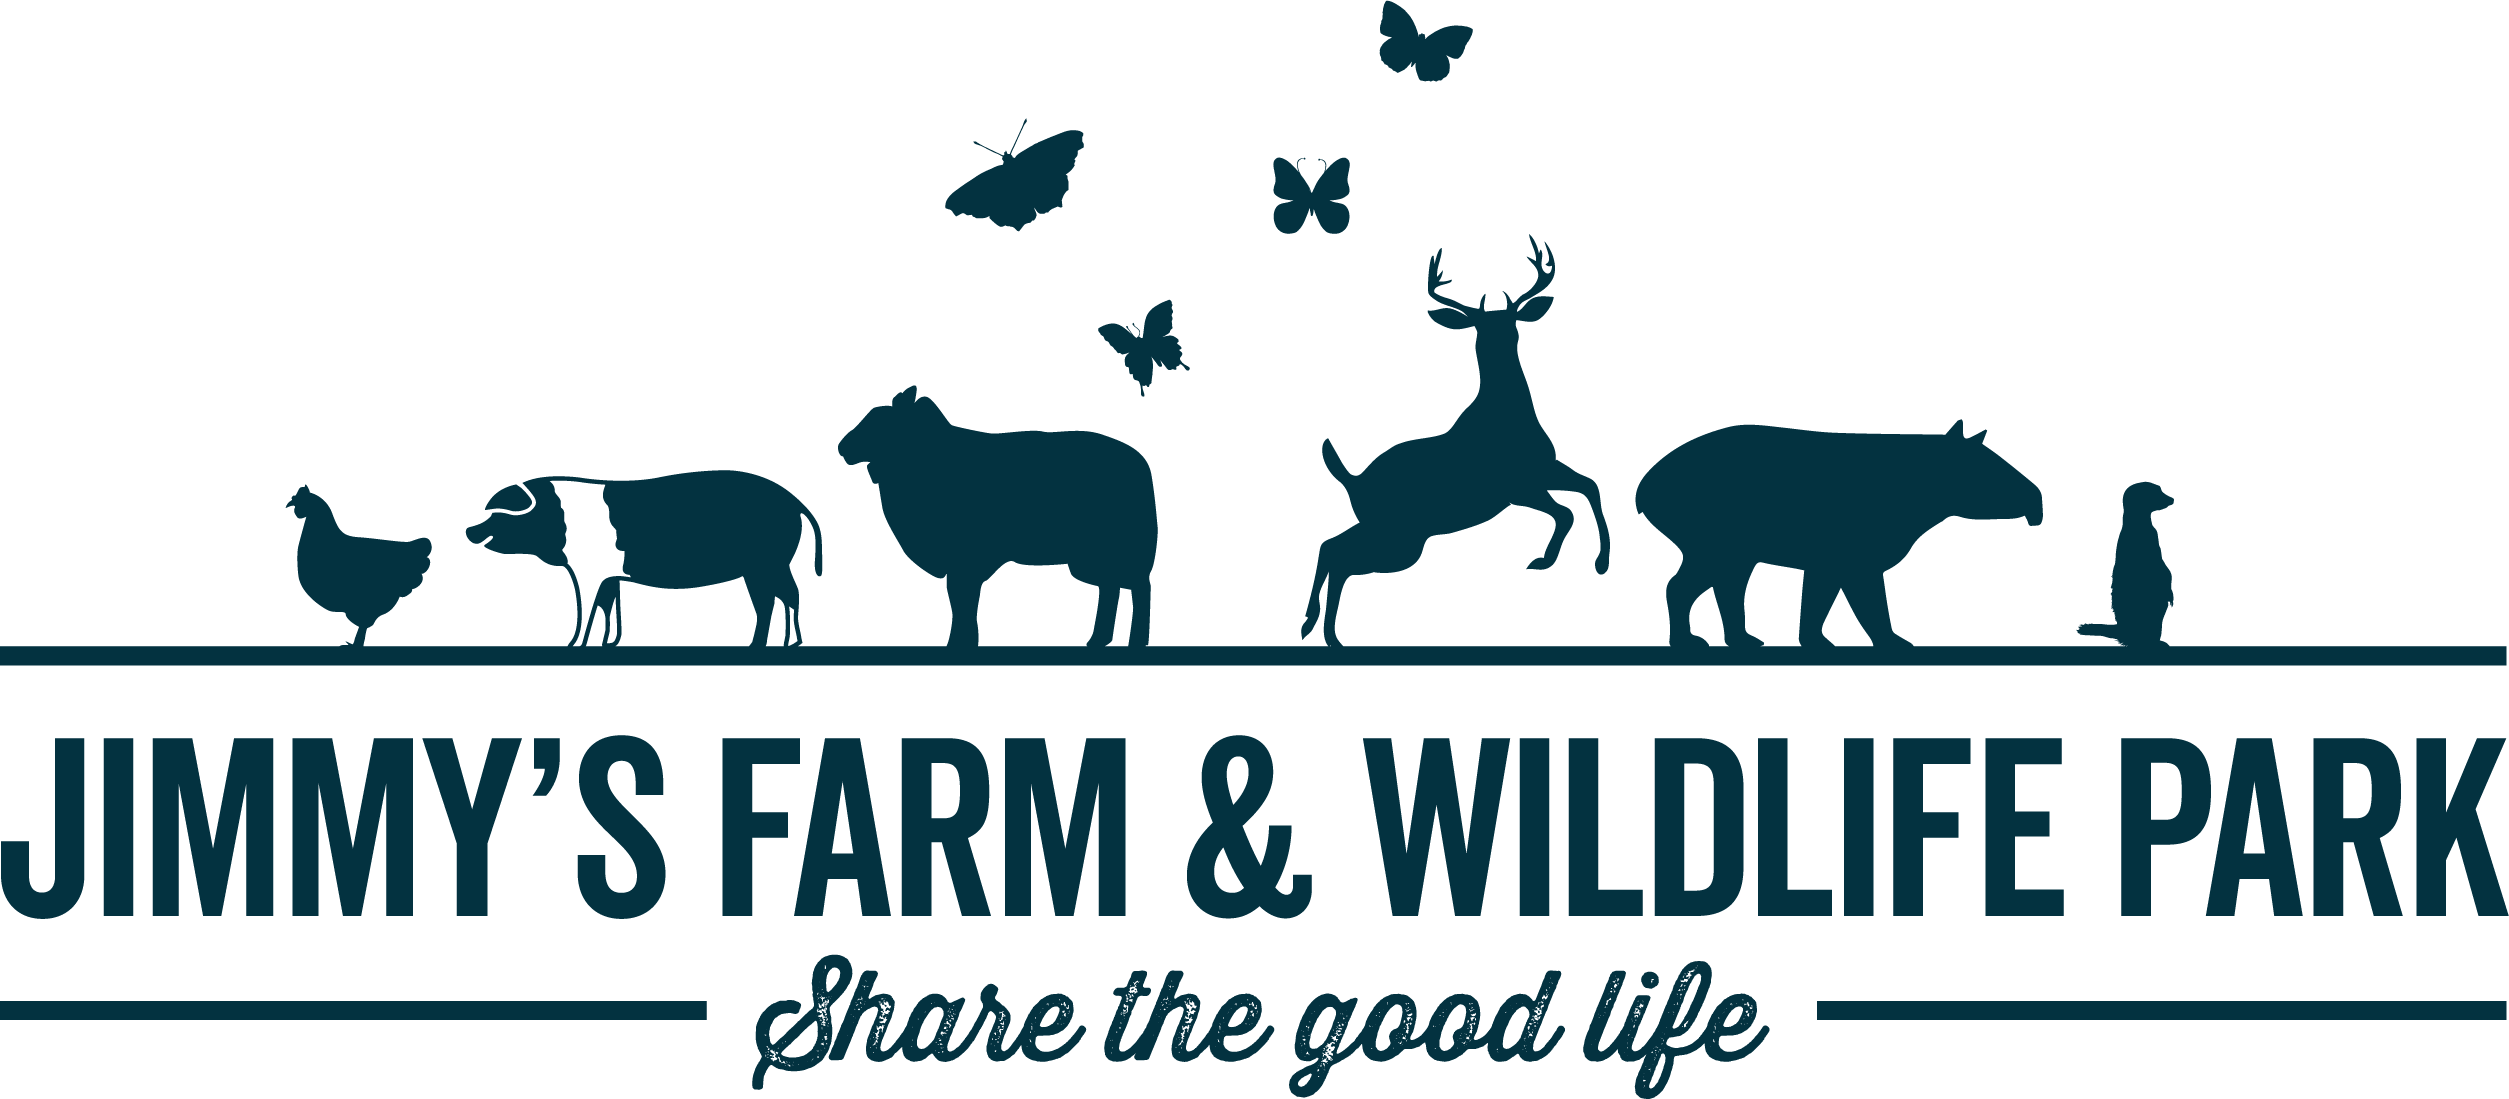 Jimmys Farm & Wildlife Park logo